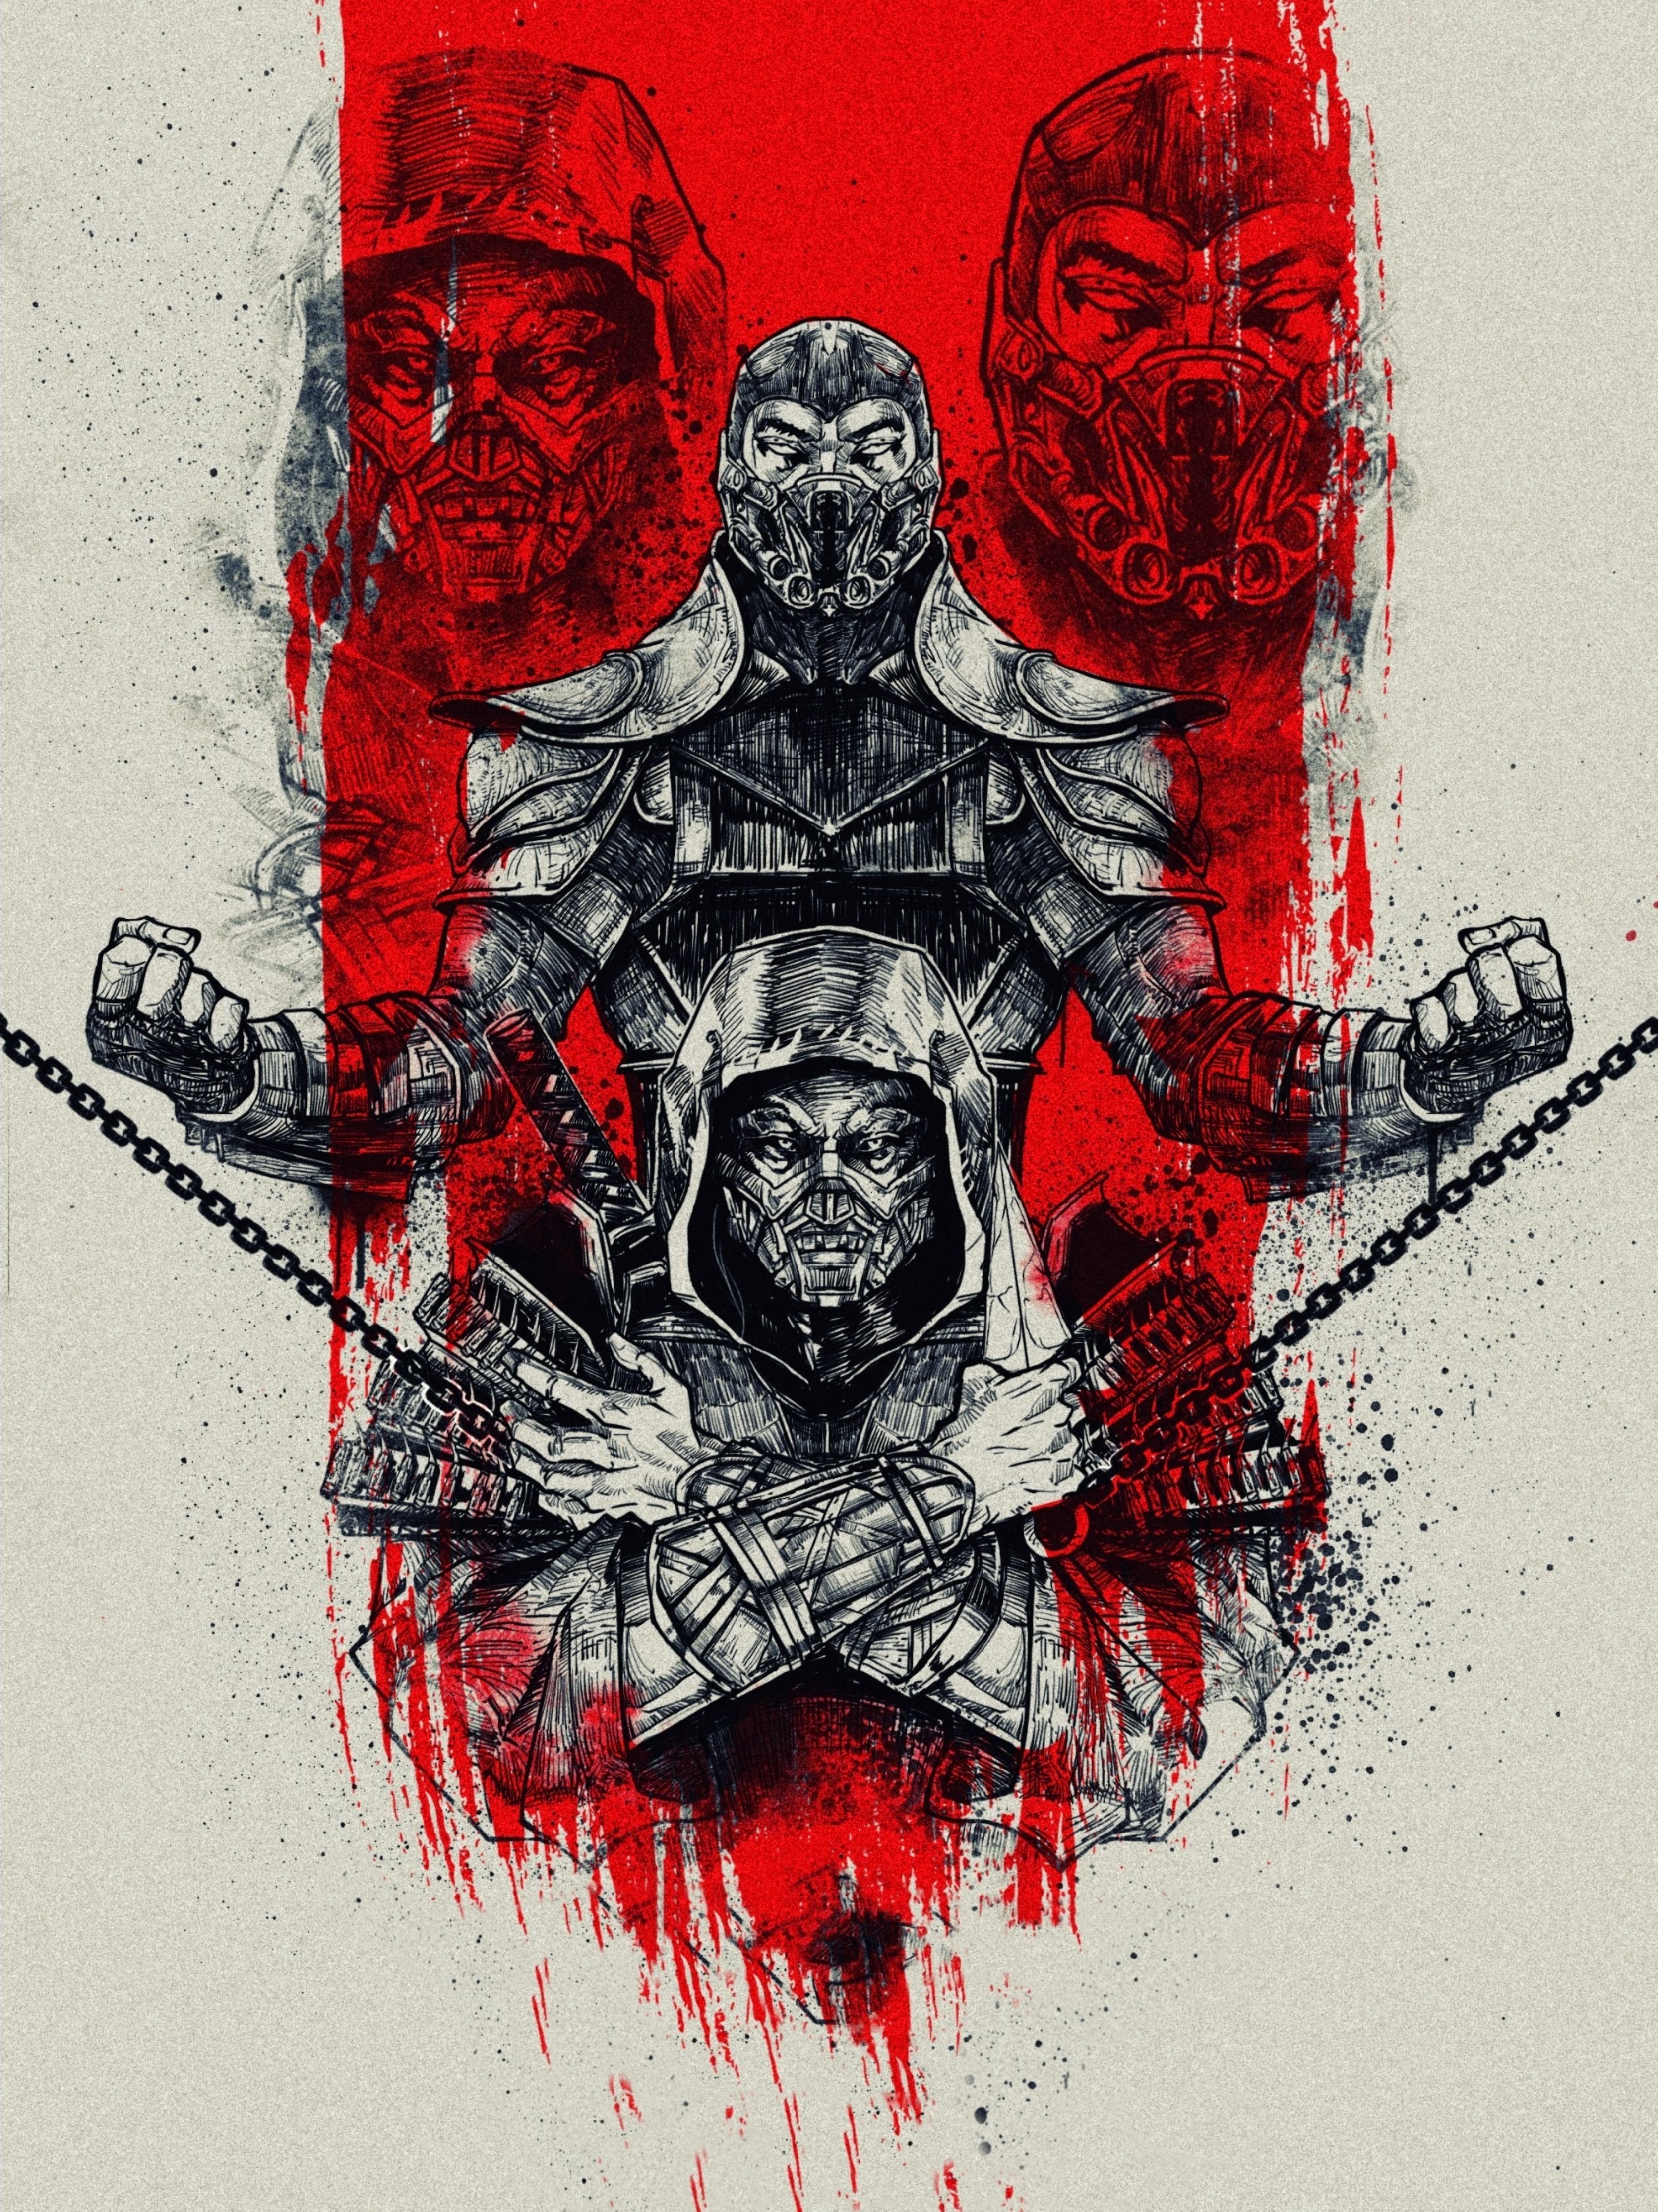 Mortal Kombat (2021) Poster Design : r/MortalKombat